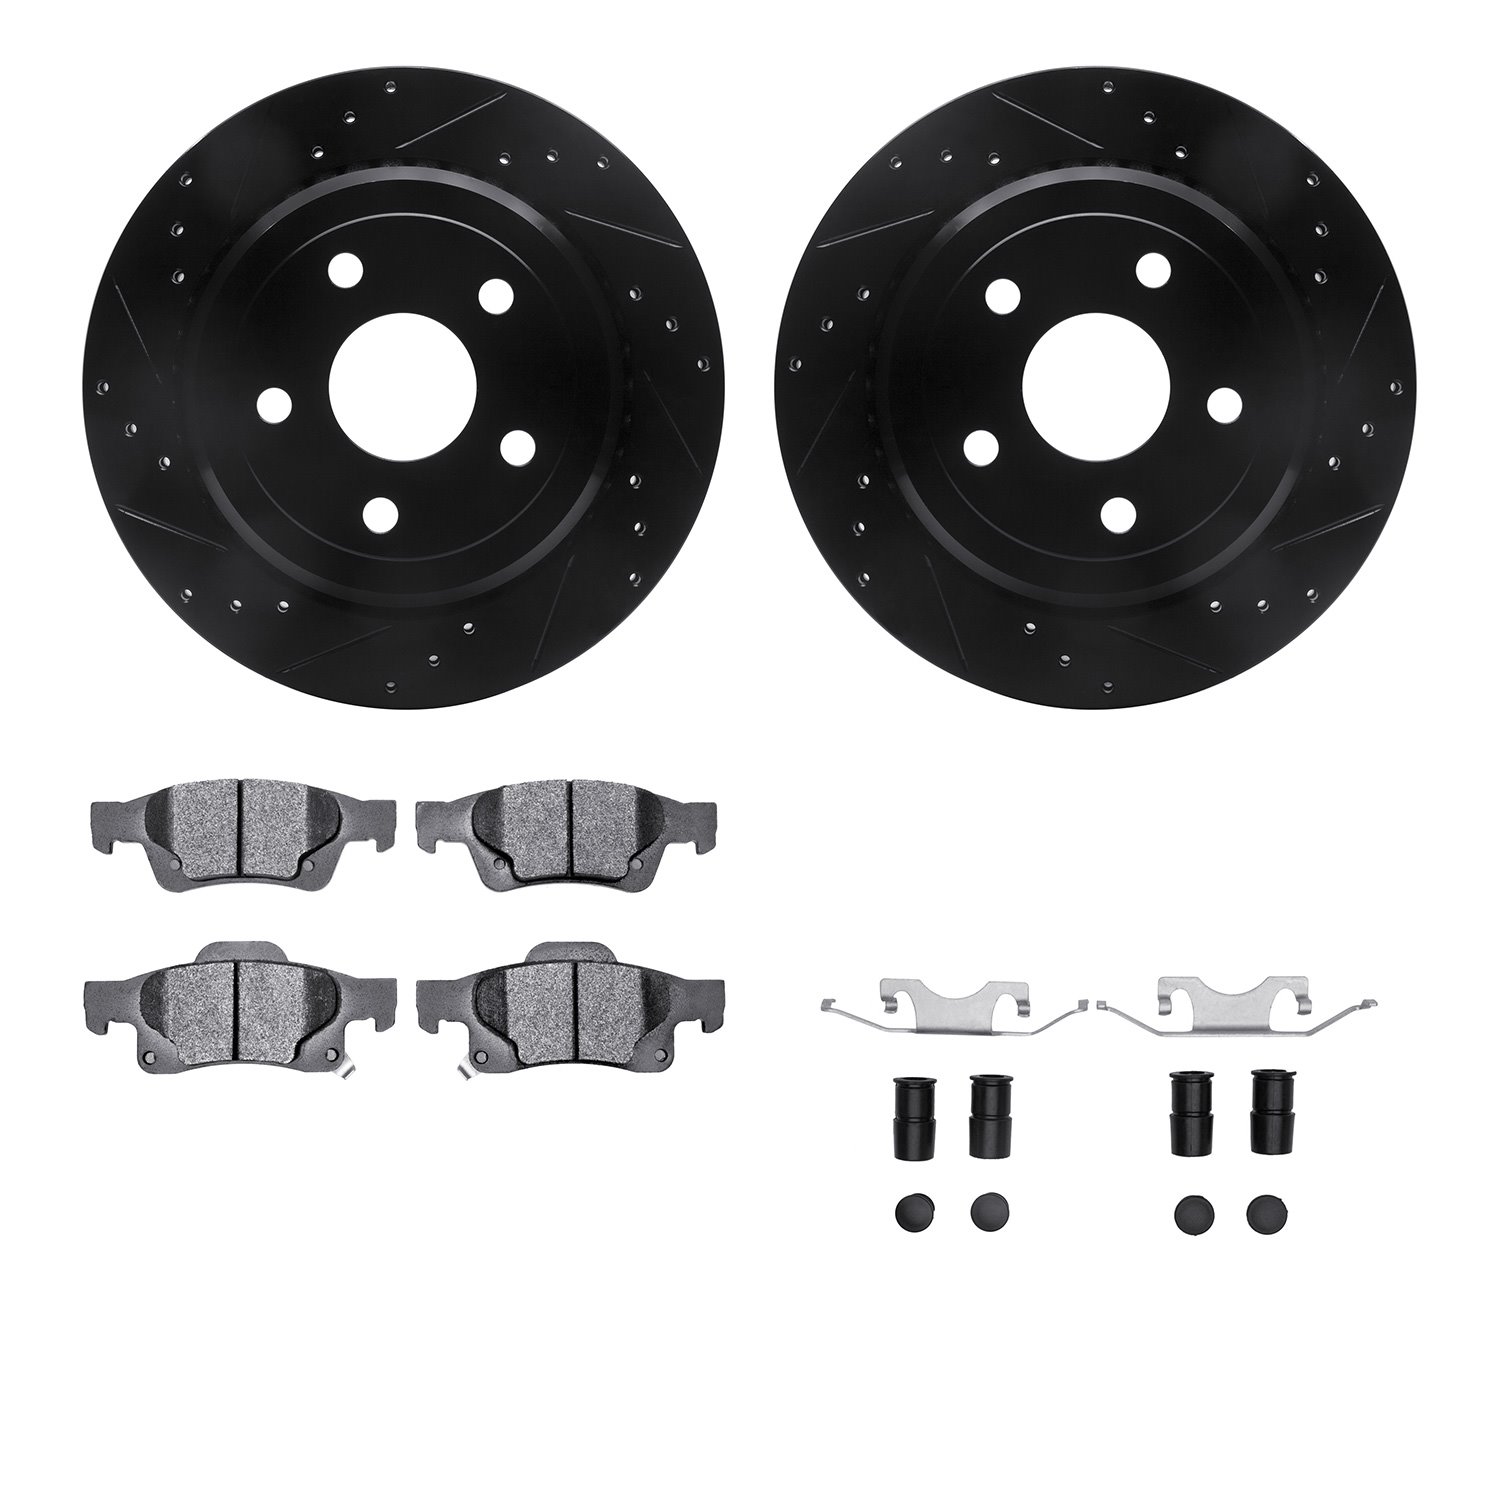 8412-42007 Drilled/Slotted Brake Rotors with Ultimate-Duty Brake Pads Kit & Hardware [Black], Fits Select Mopar, Position: Rear